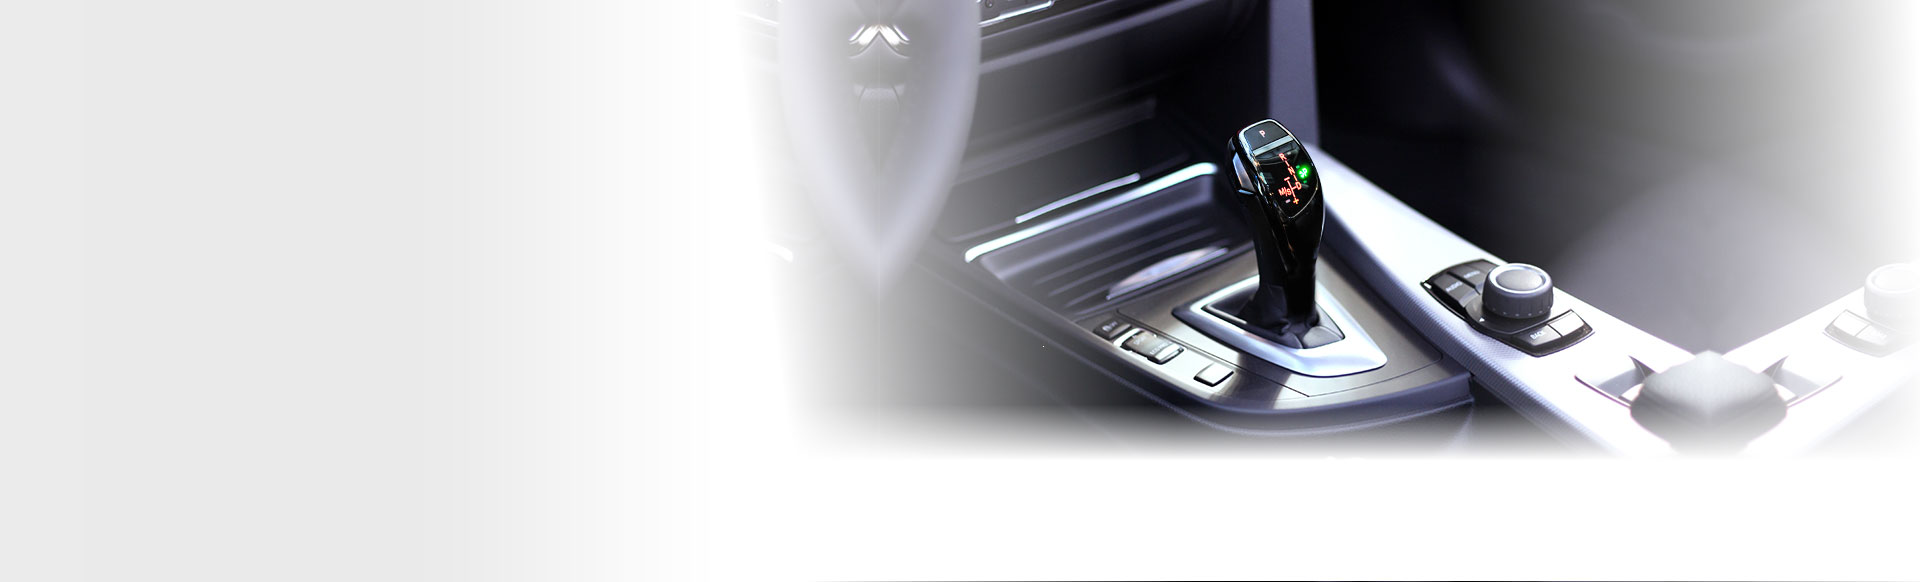 LED Gear Shift Knob for BMW